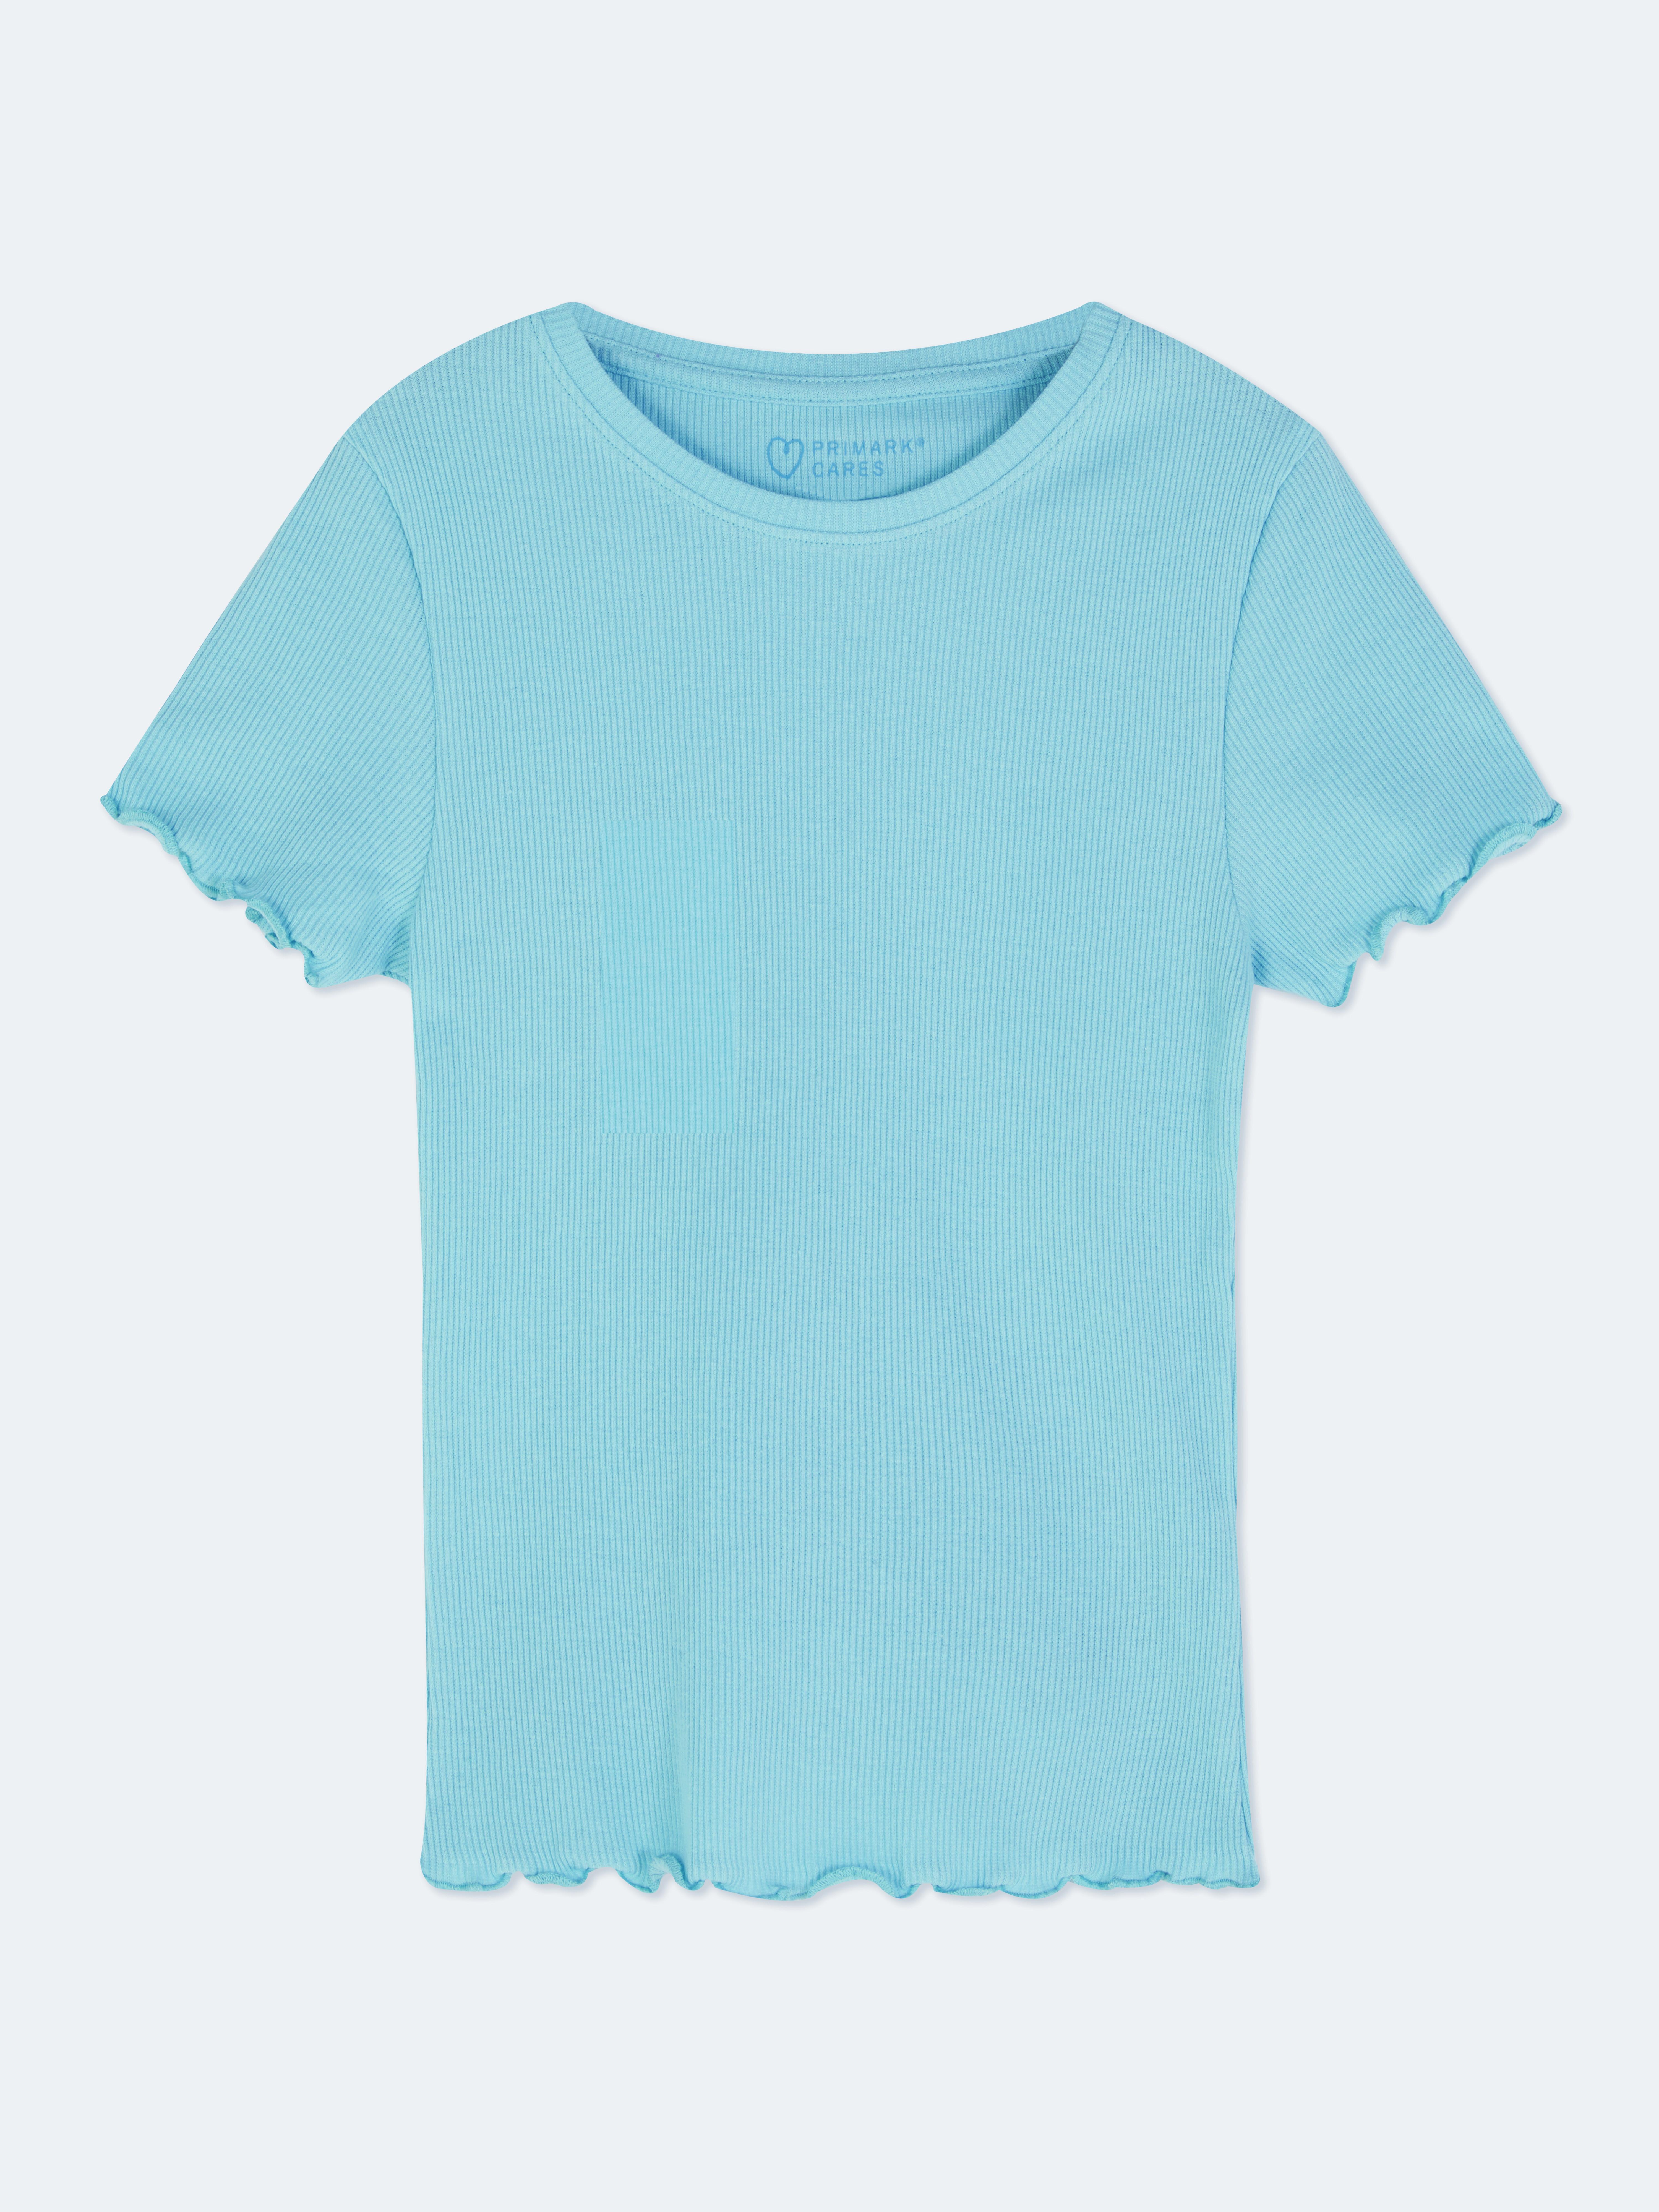 Tops para niñas - Camisetas | Camisolas de manga larga. Primark